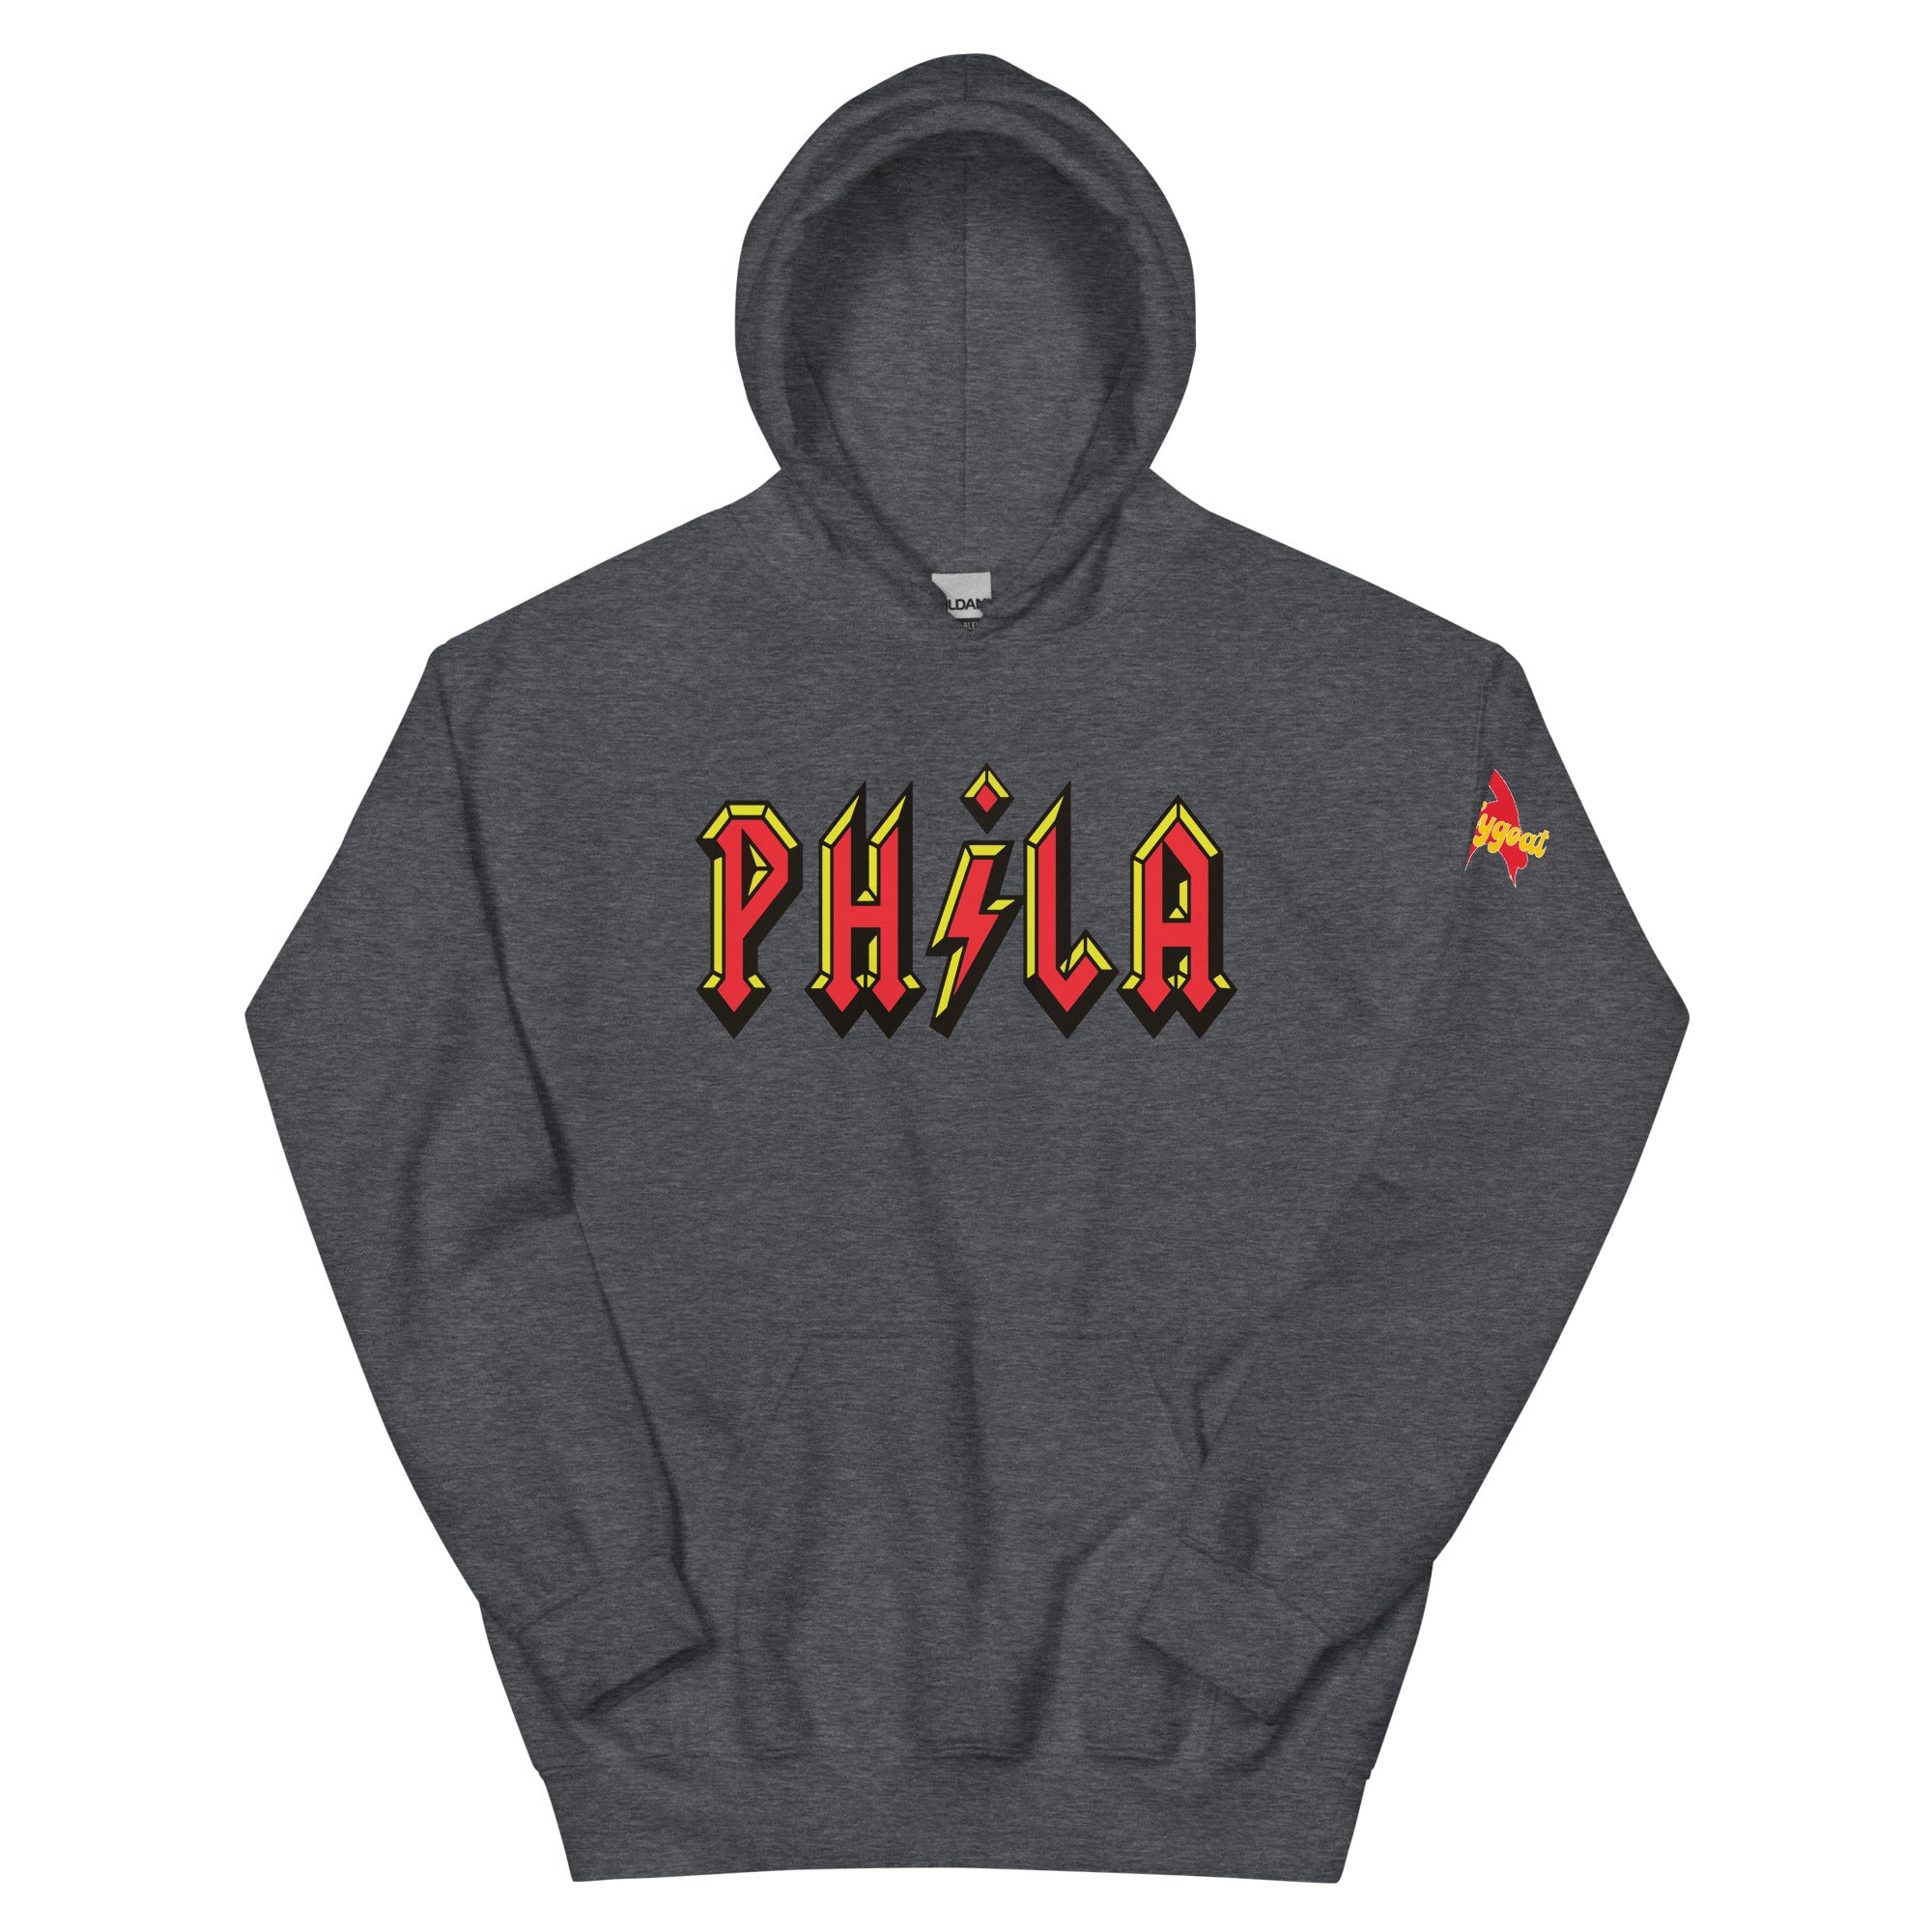 Philadelphia Phila ACDC High Voltage dark heather grey hoodie Phillygoat